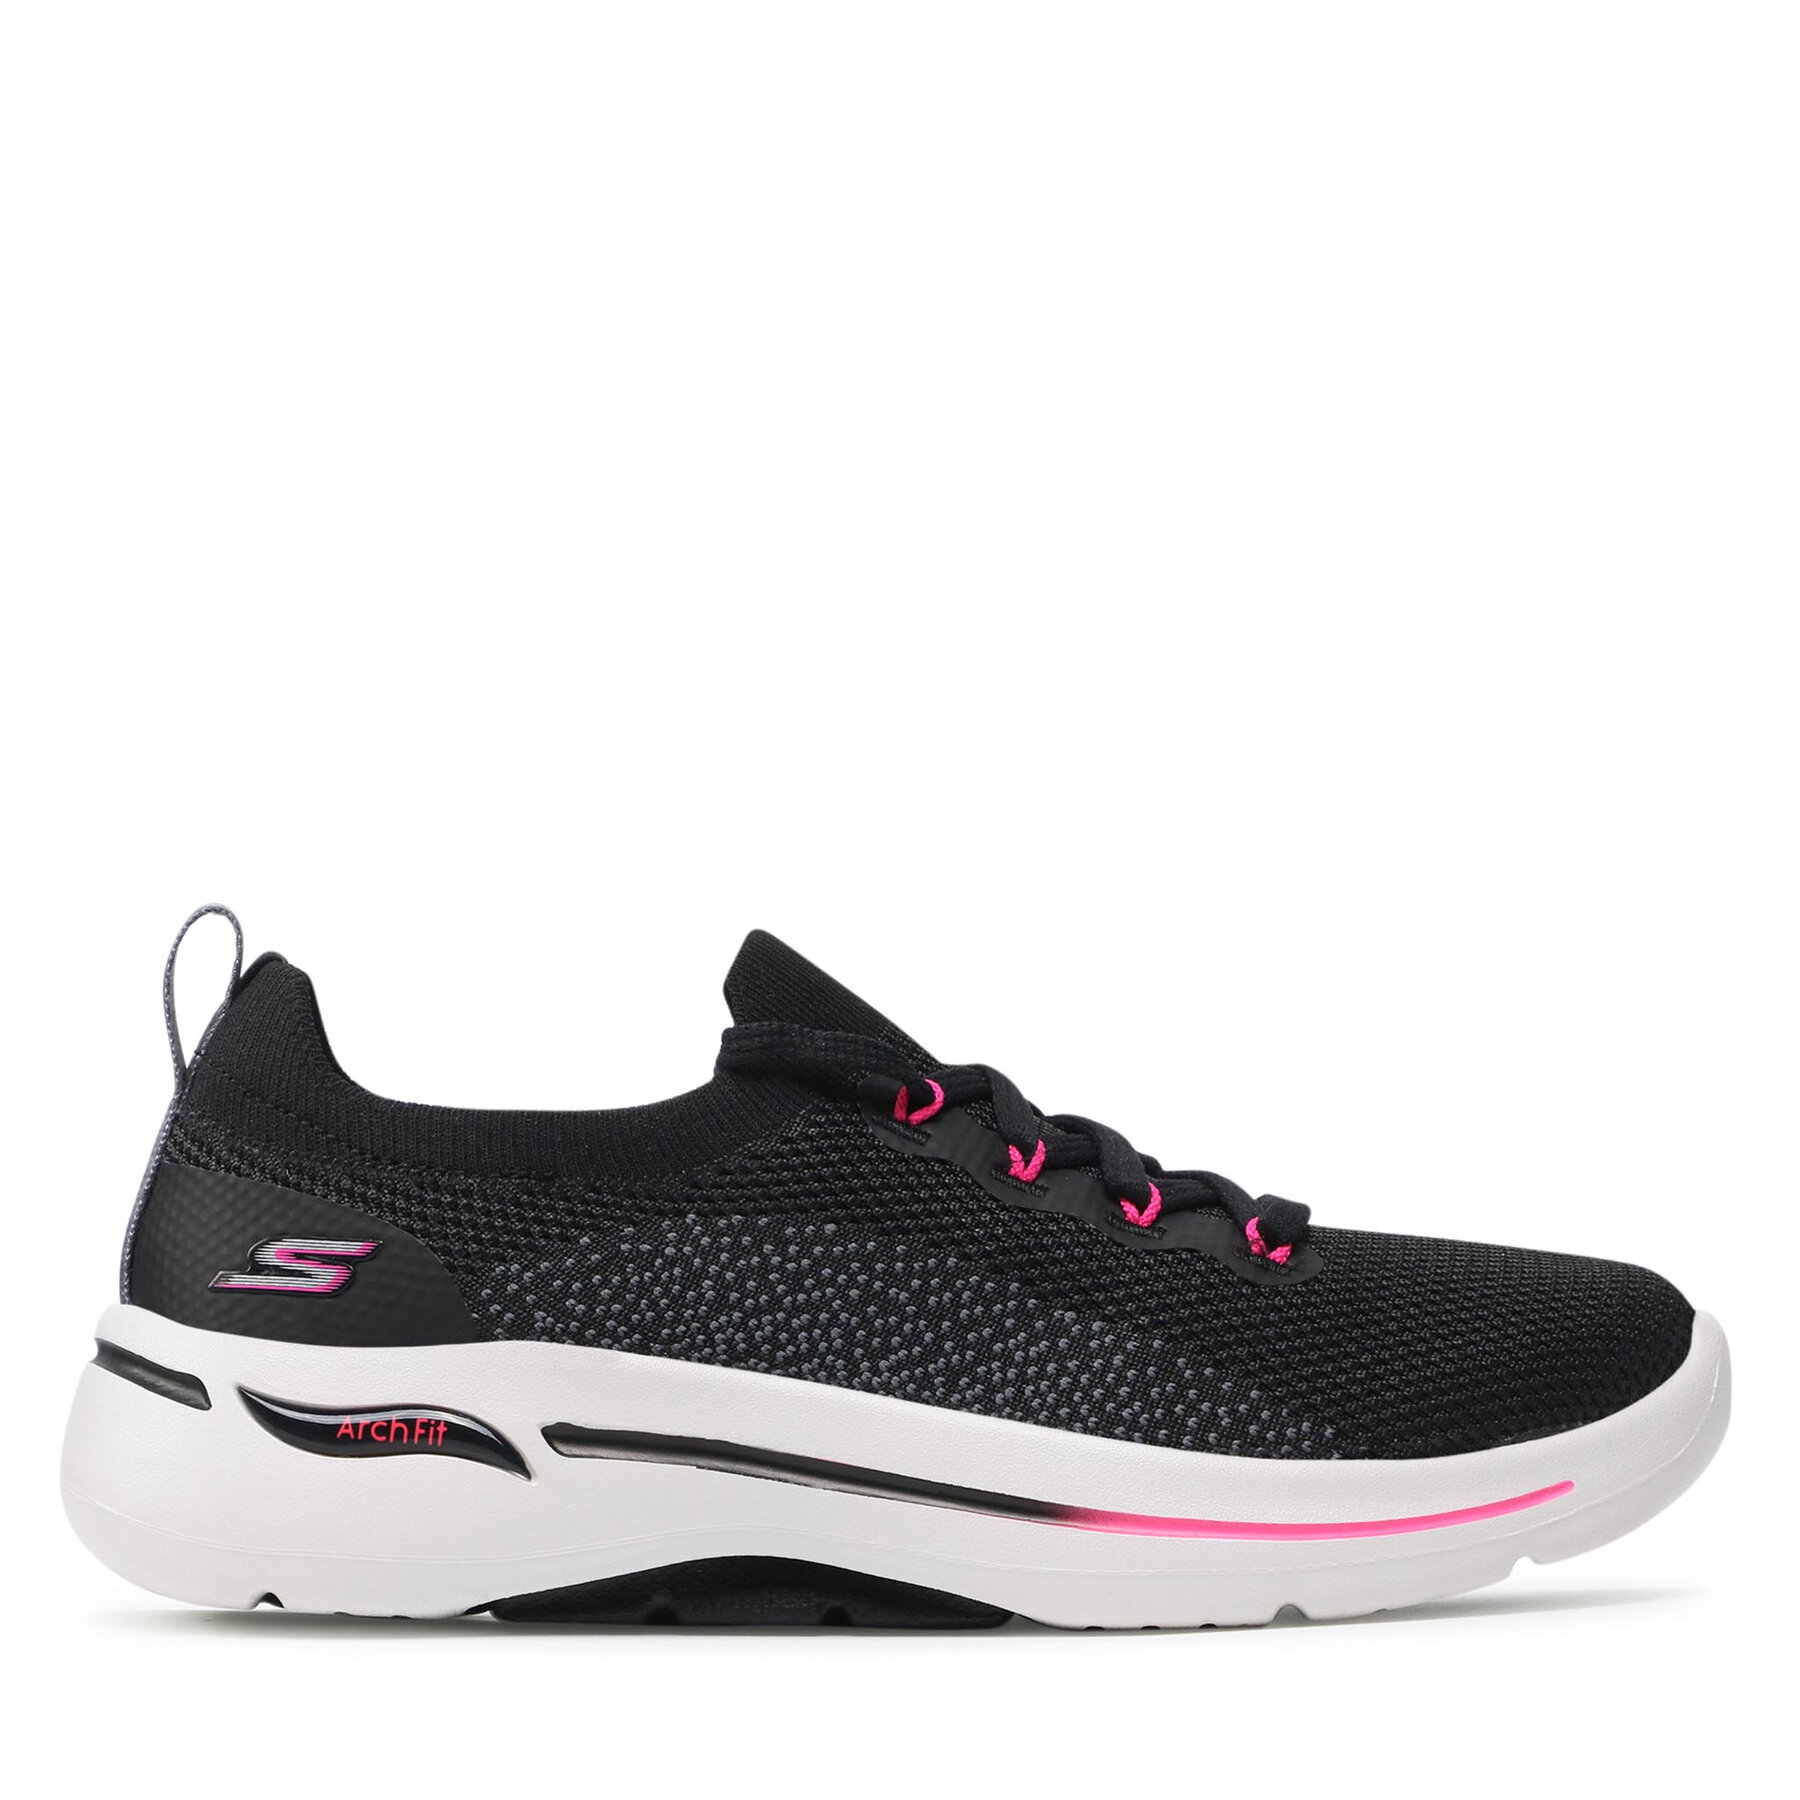 Sneakers Skechers Go Walk Arch Fit 124863/BKHP Black/Hot Pink von Skechers